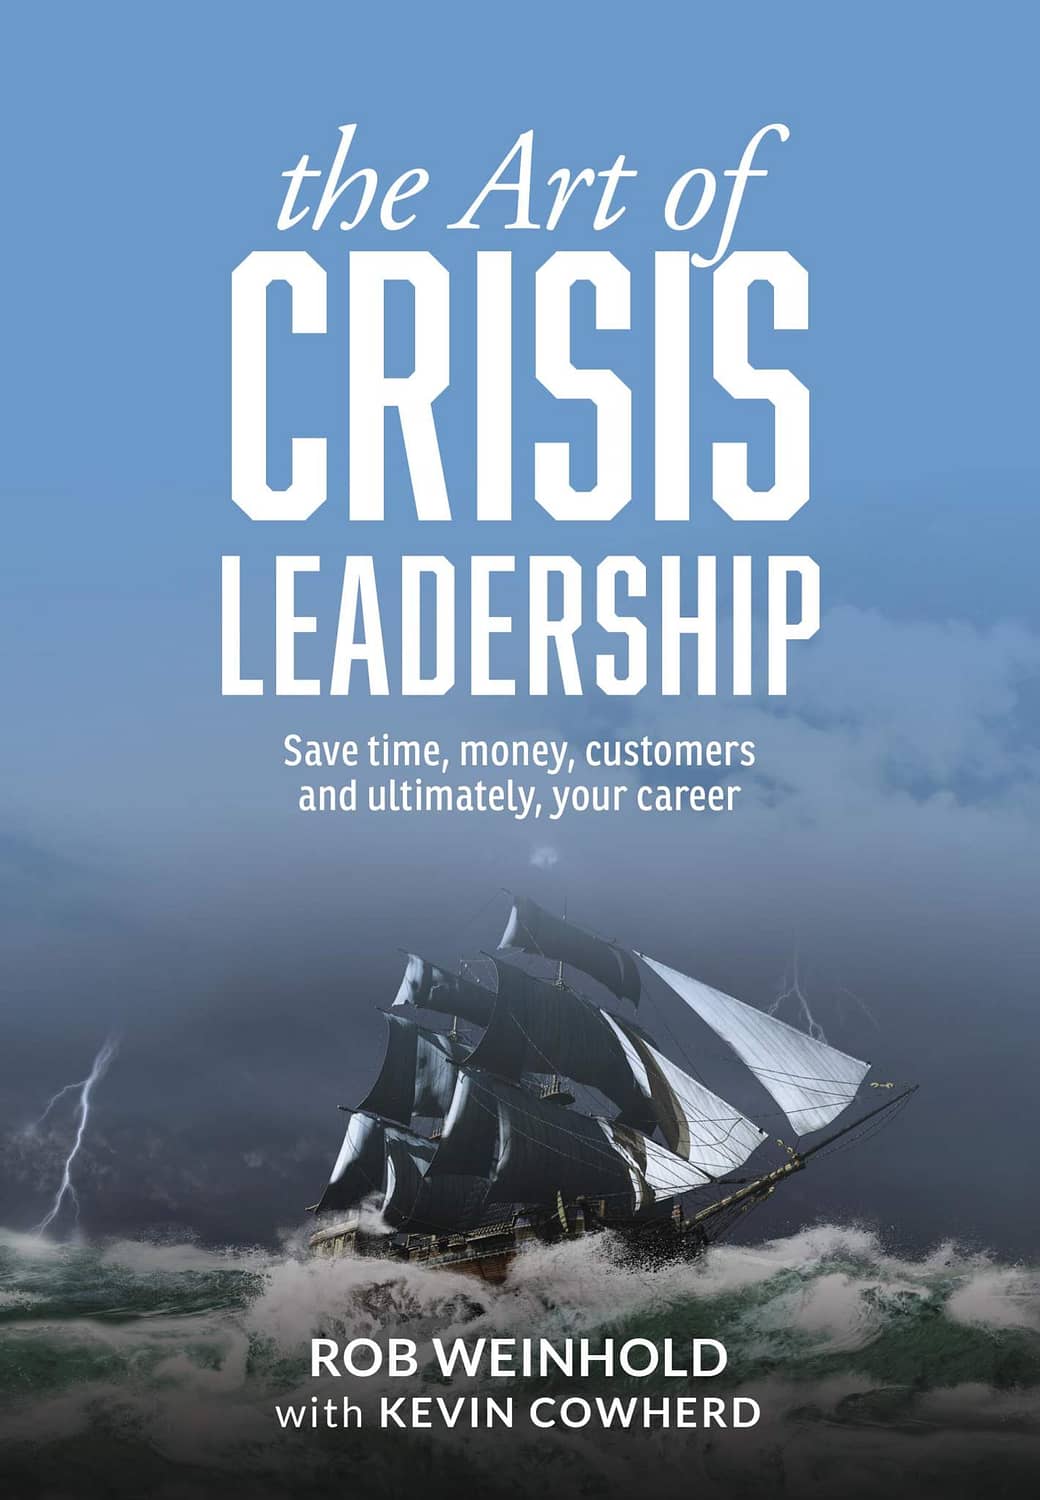 Top Crisis Leadership Expert Authors